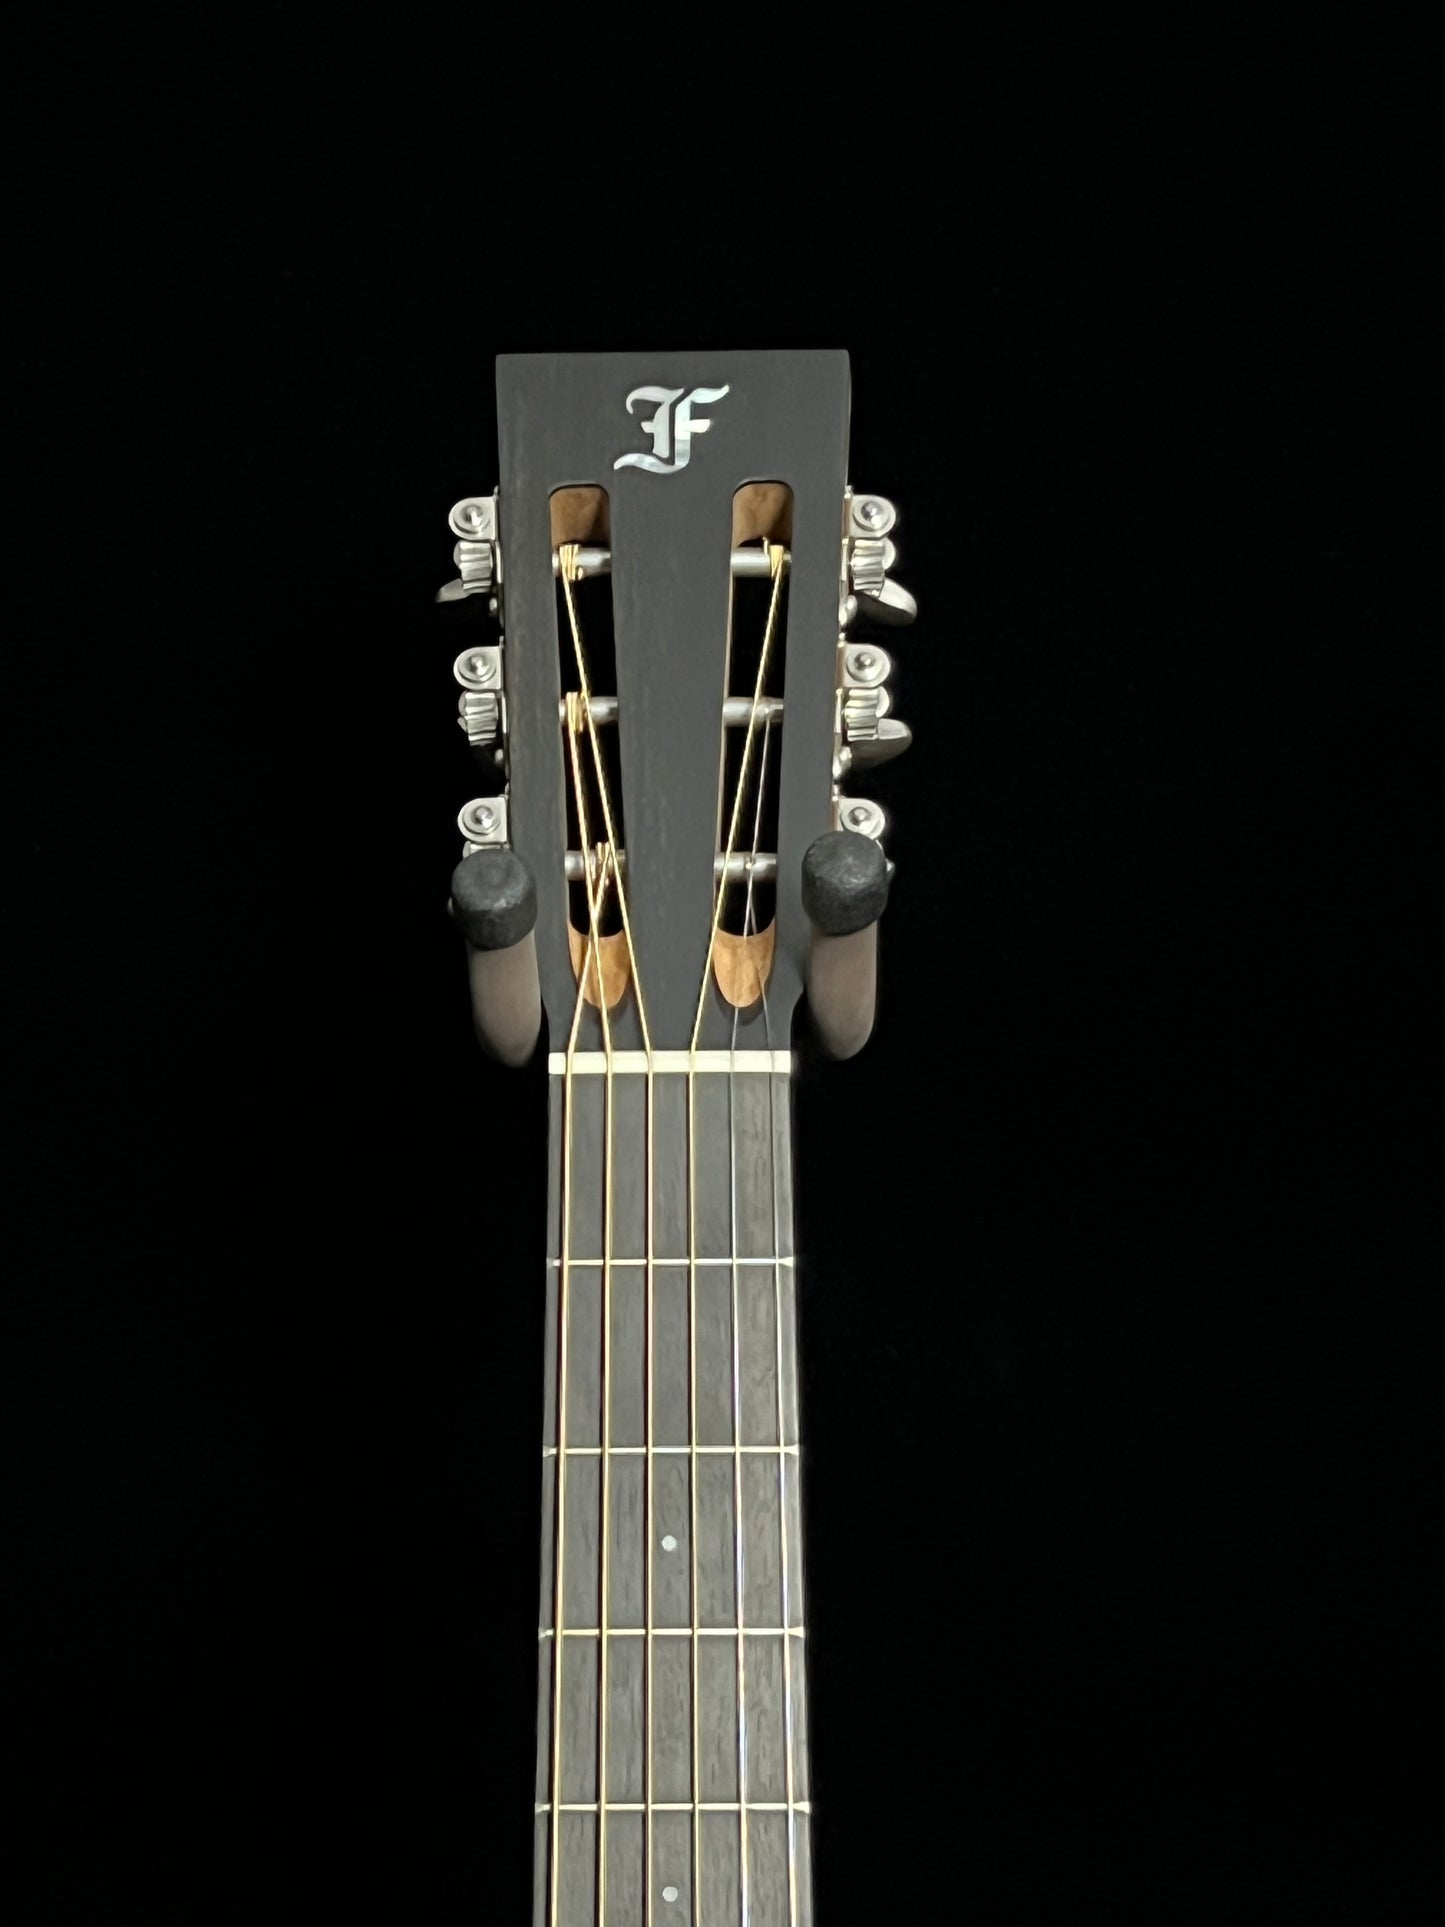 SOLD - Furch Vintage 1 OOM-Sm SL Sitka Spruce/ Mahogany 12 Fret Acoustic Guitar - New